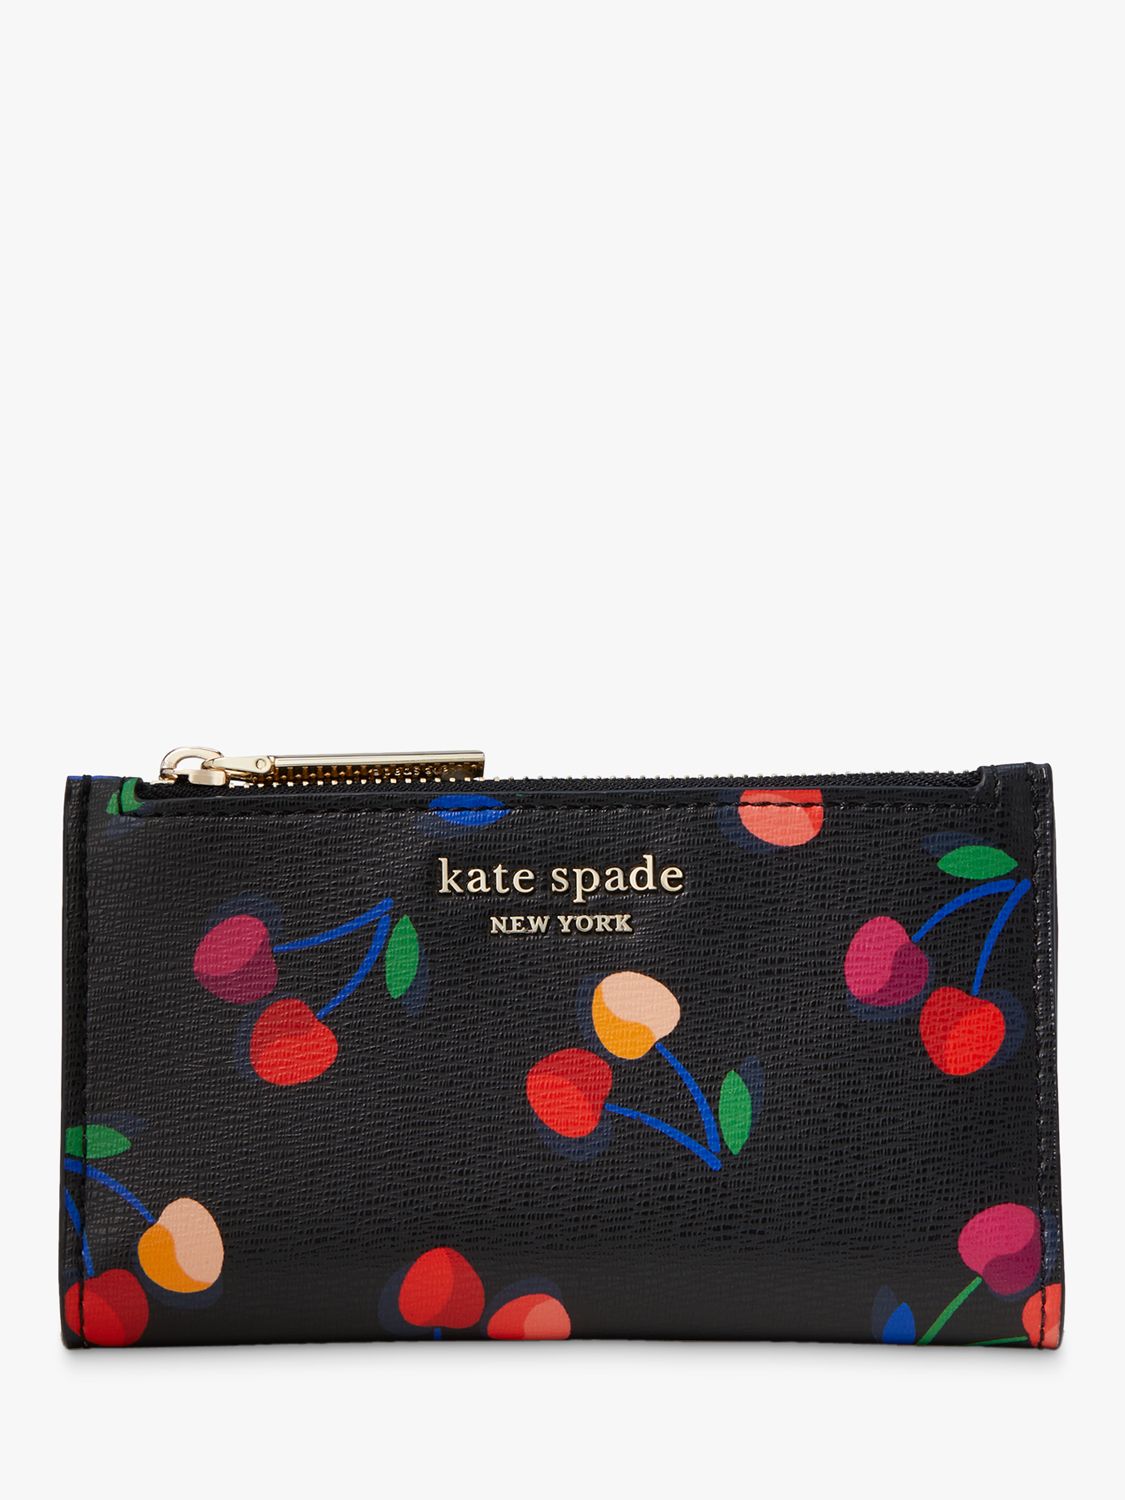 kate spade new york Cherries Small Slim Leather Bi-Fold Purse, Black